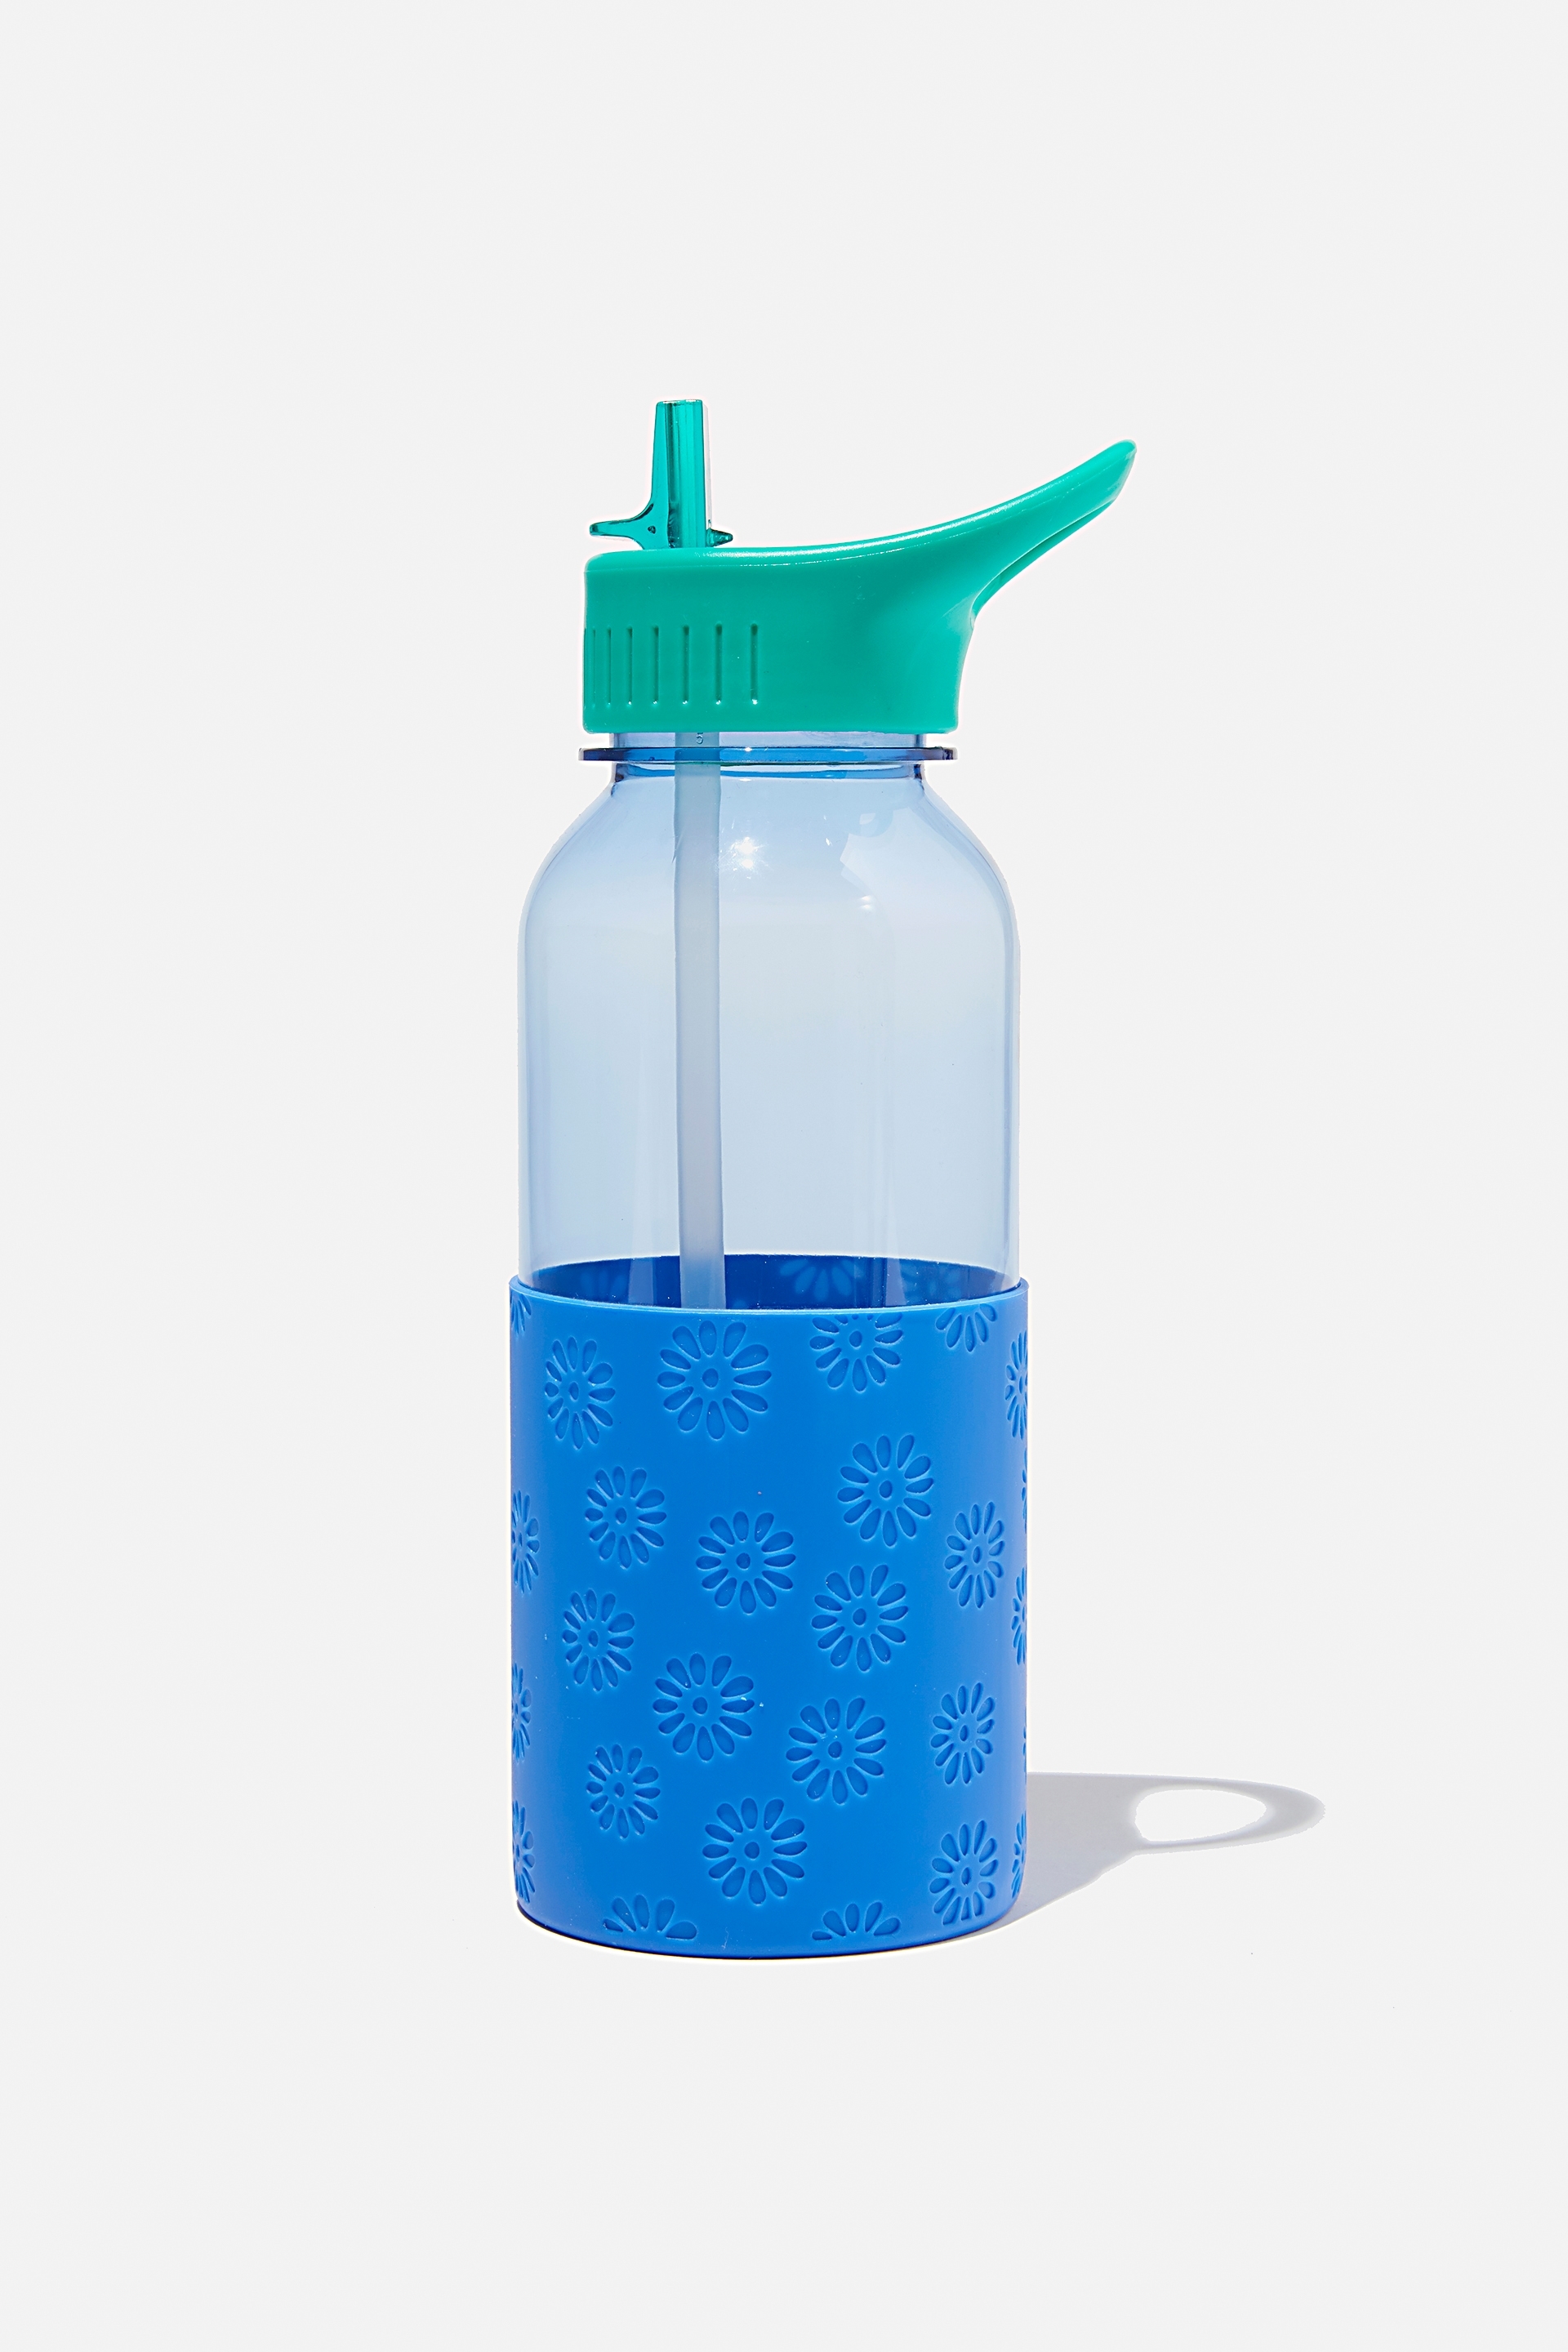 Typo - Premium Drink It Up Bottle - Floral skyscraper blue